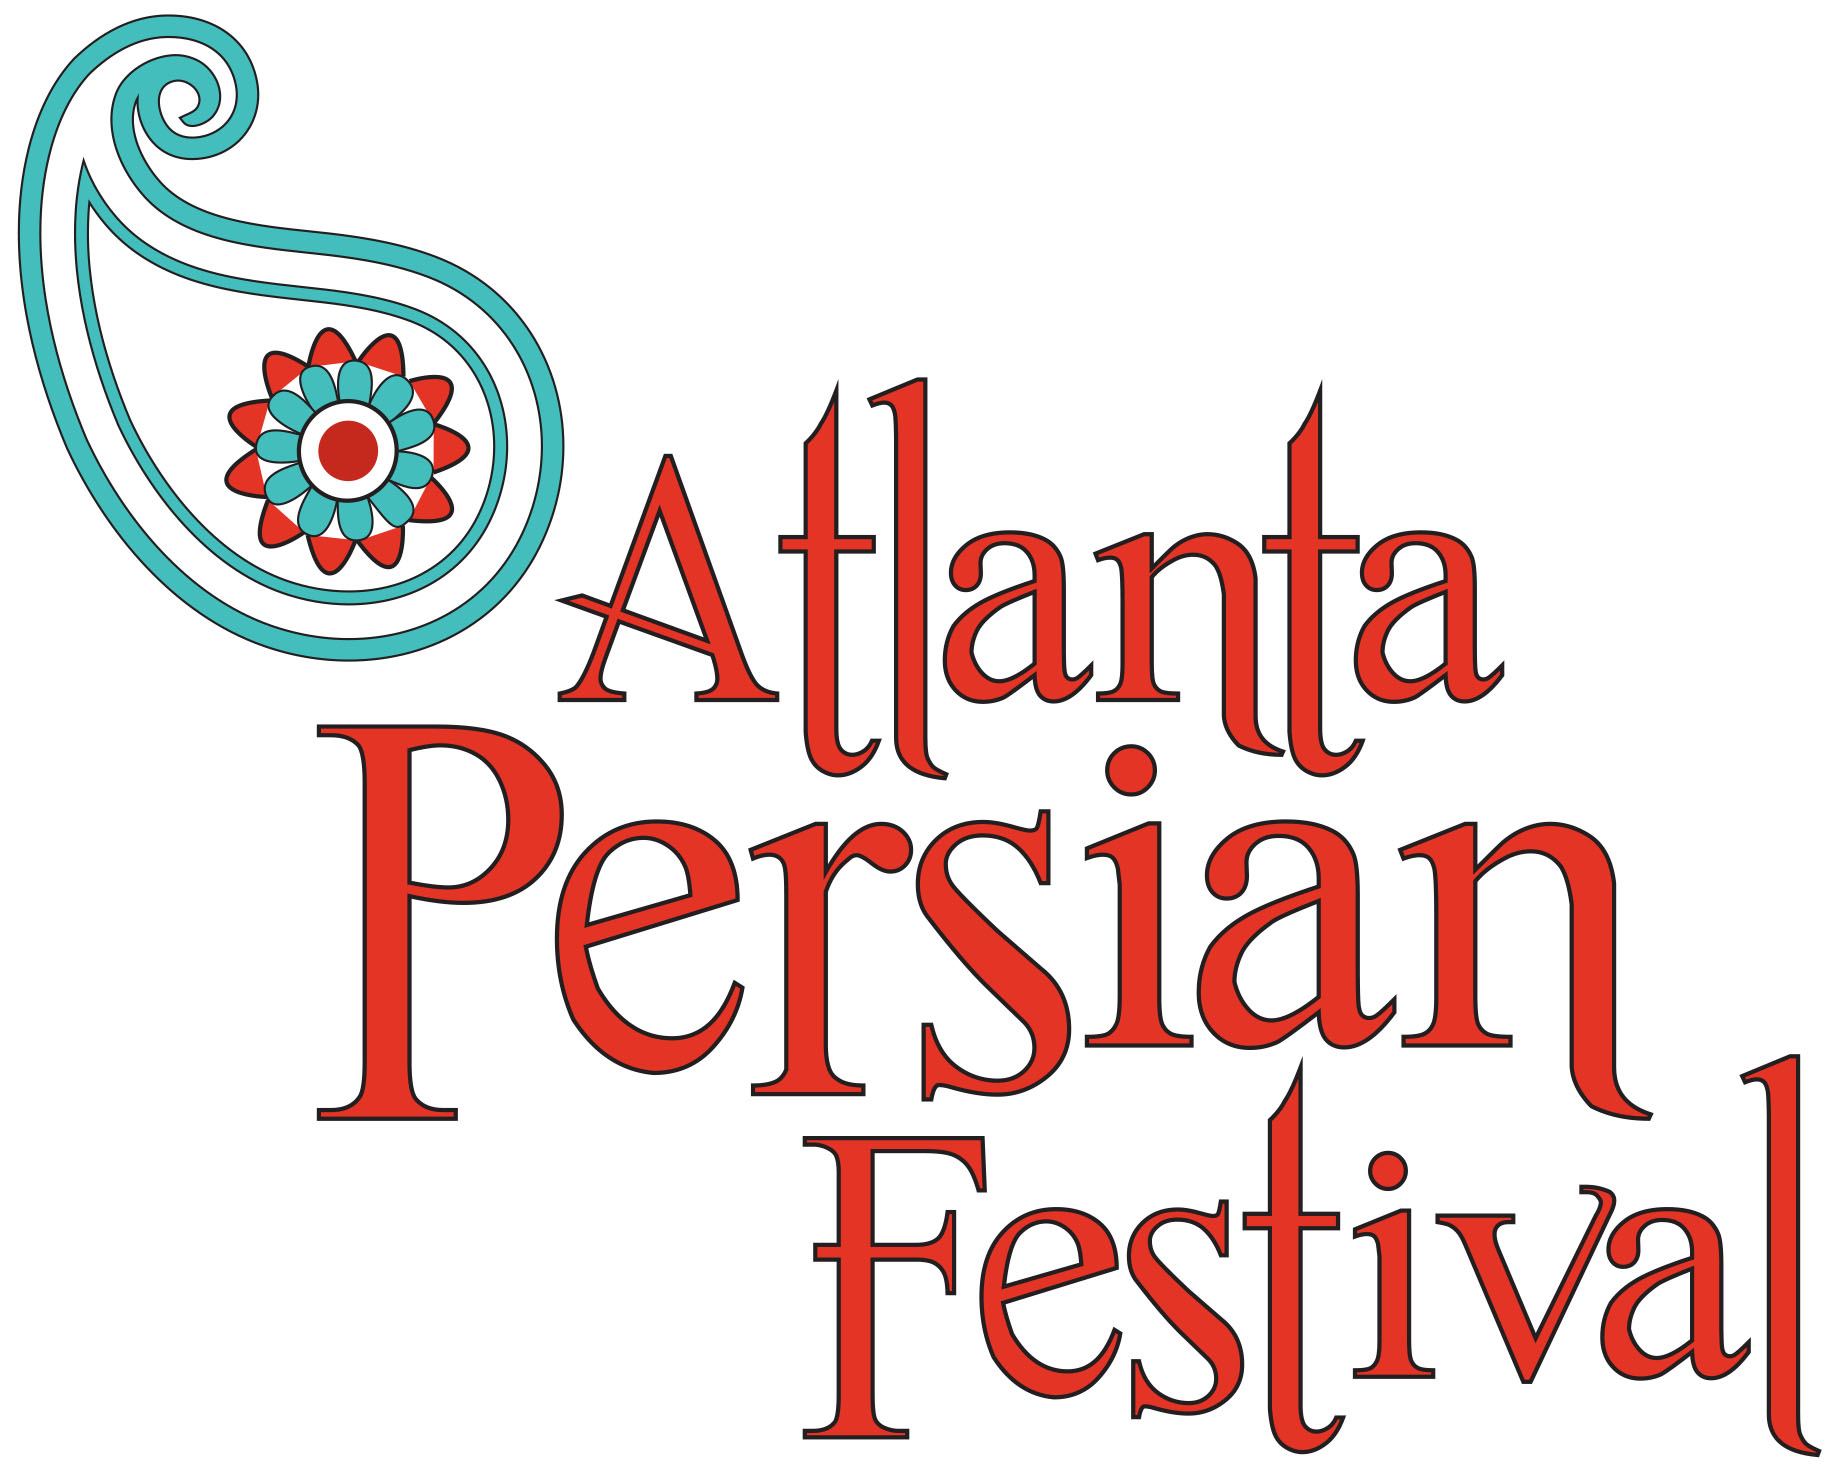 Atlanta Persian Festival 2014 The Aha! Connection